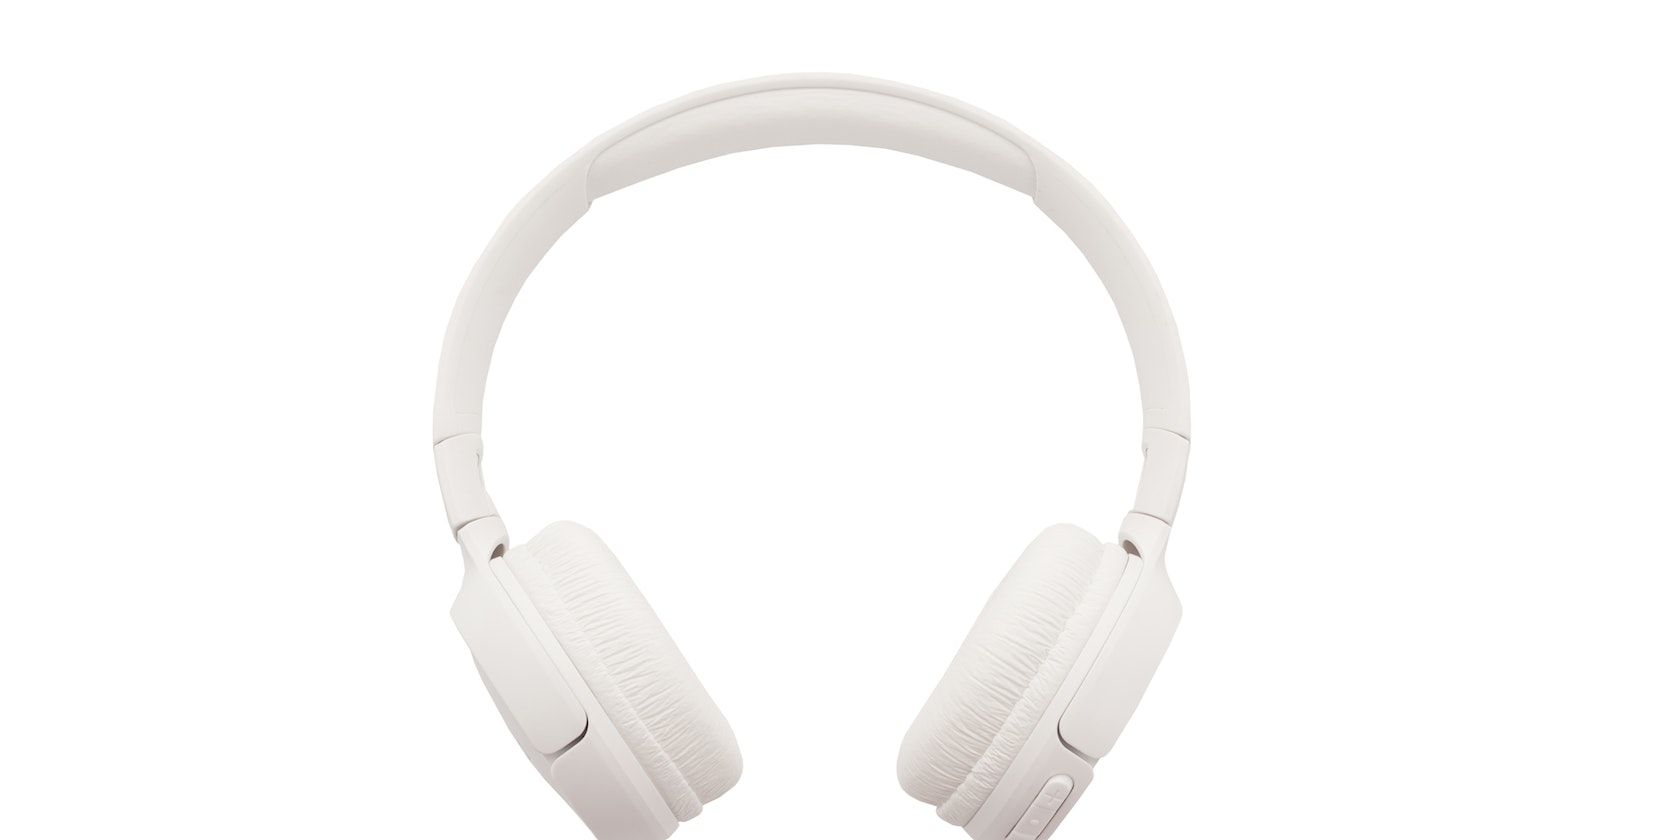 A white wireless headphone